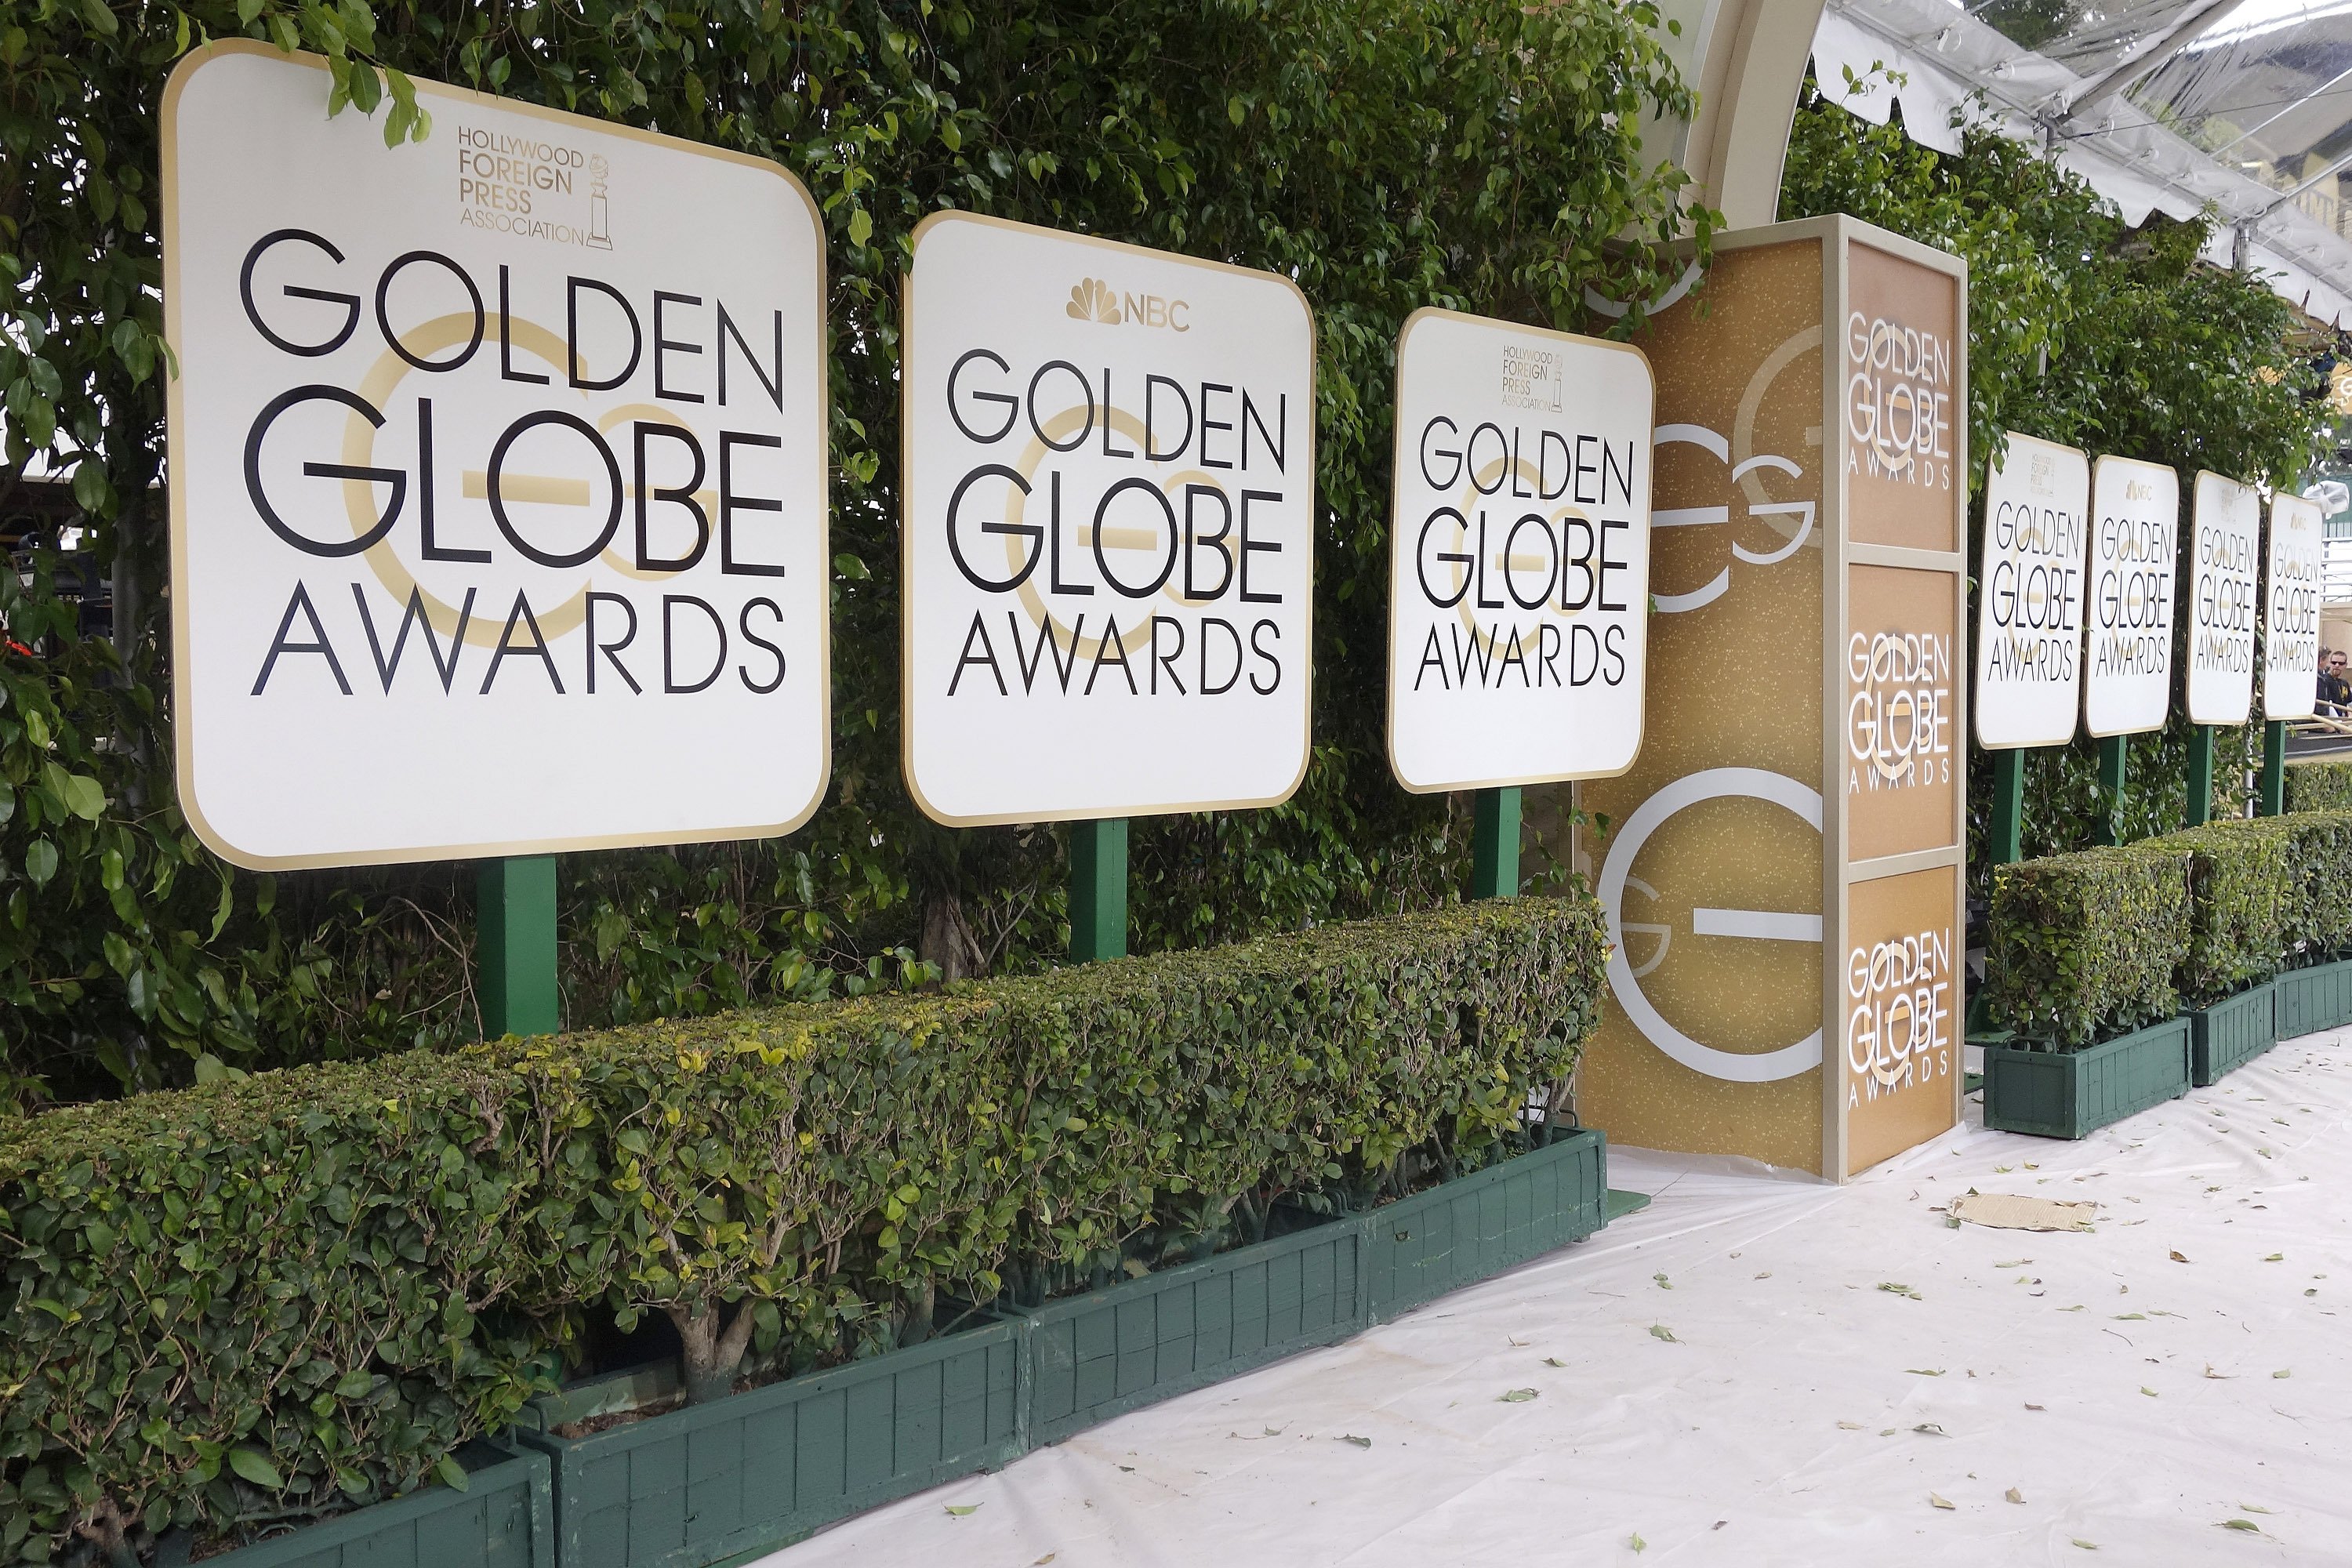 Golden Globes Sold as Hollywood Foreign Press Association Dissolves